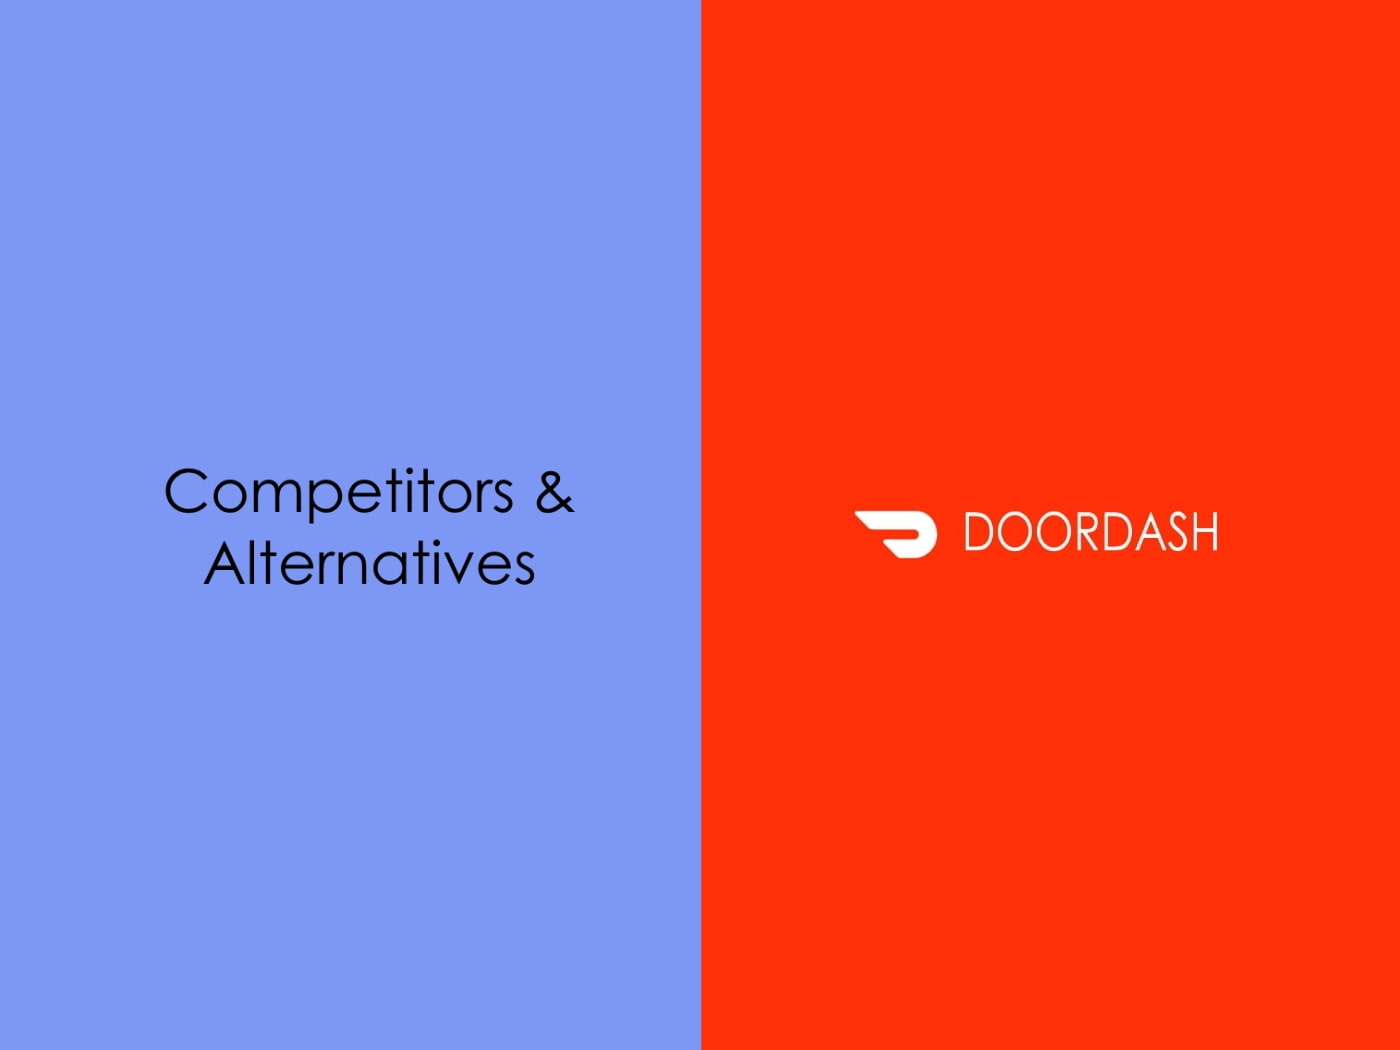 Top 10 Doordash Competitors & Alternatives (2023)